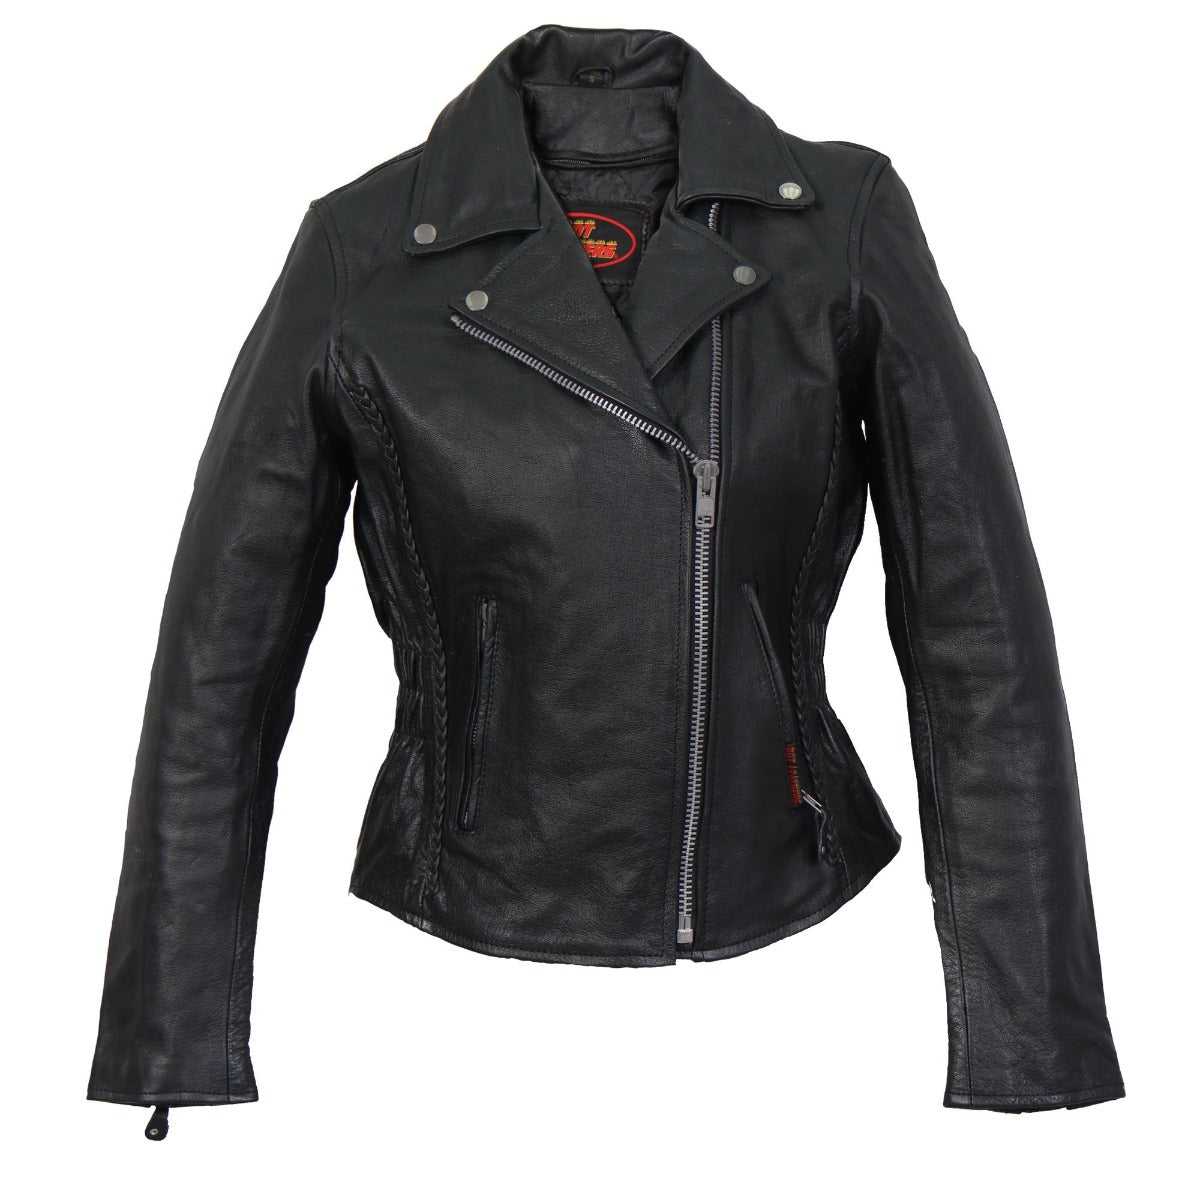 Hot Leathers Women's Braided Motorcycle Leather Jacket